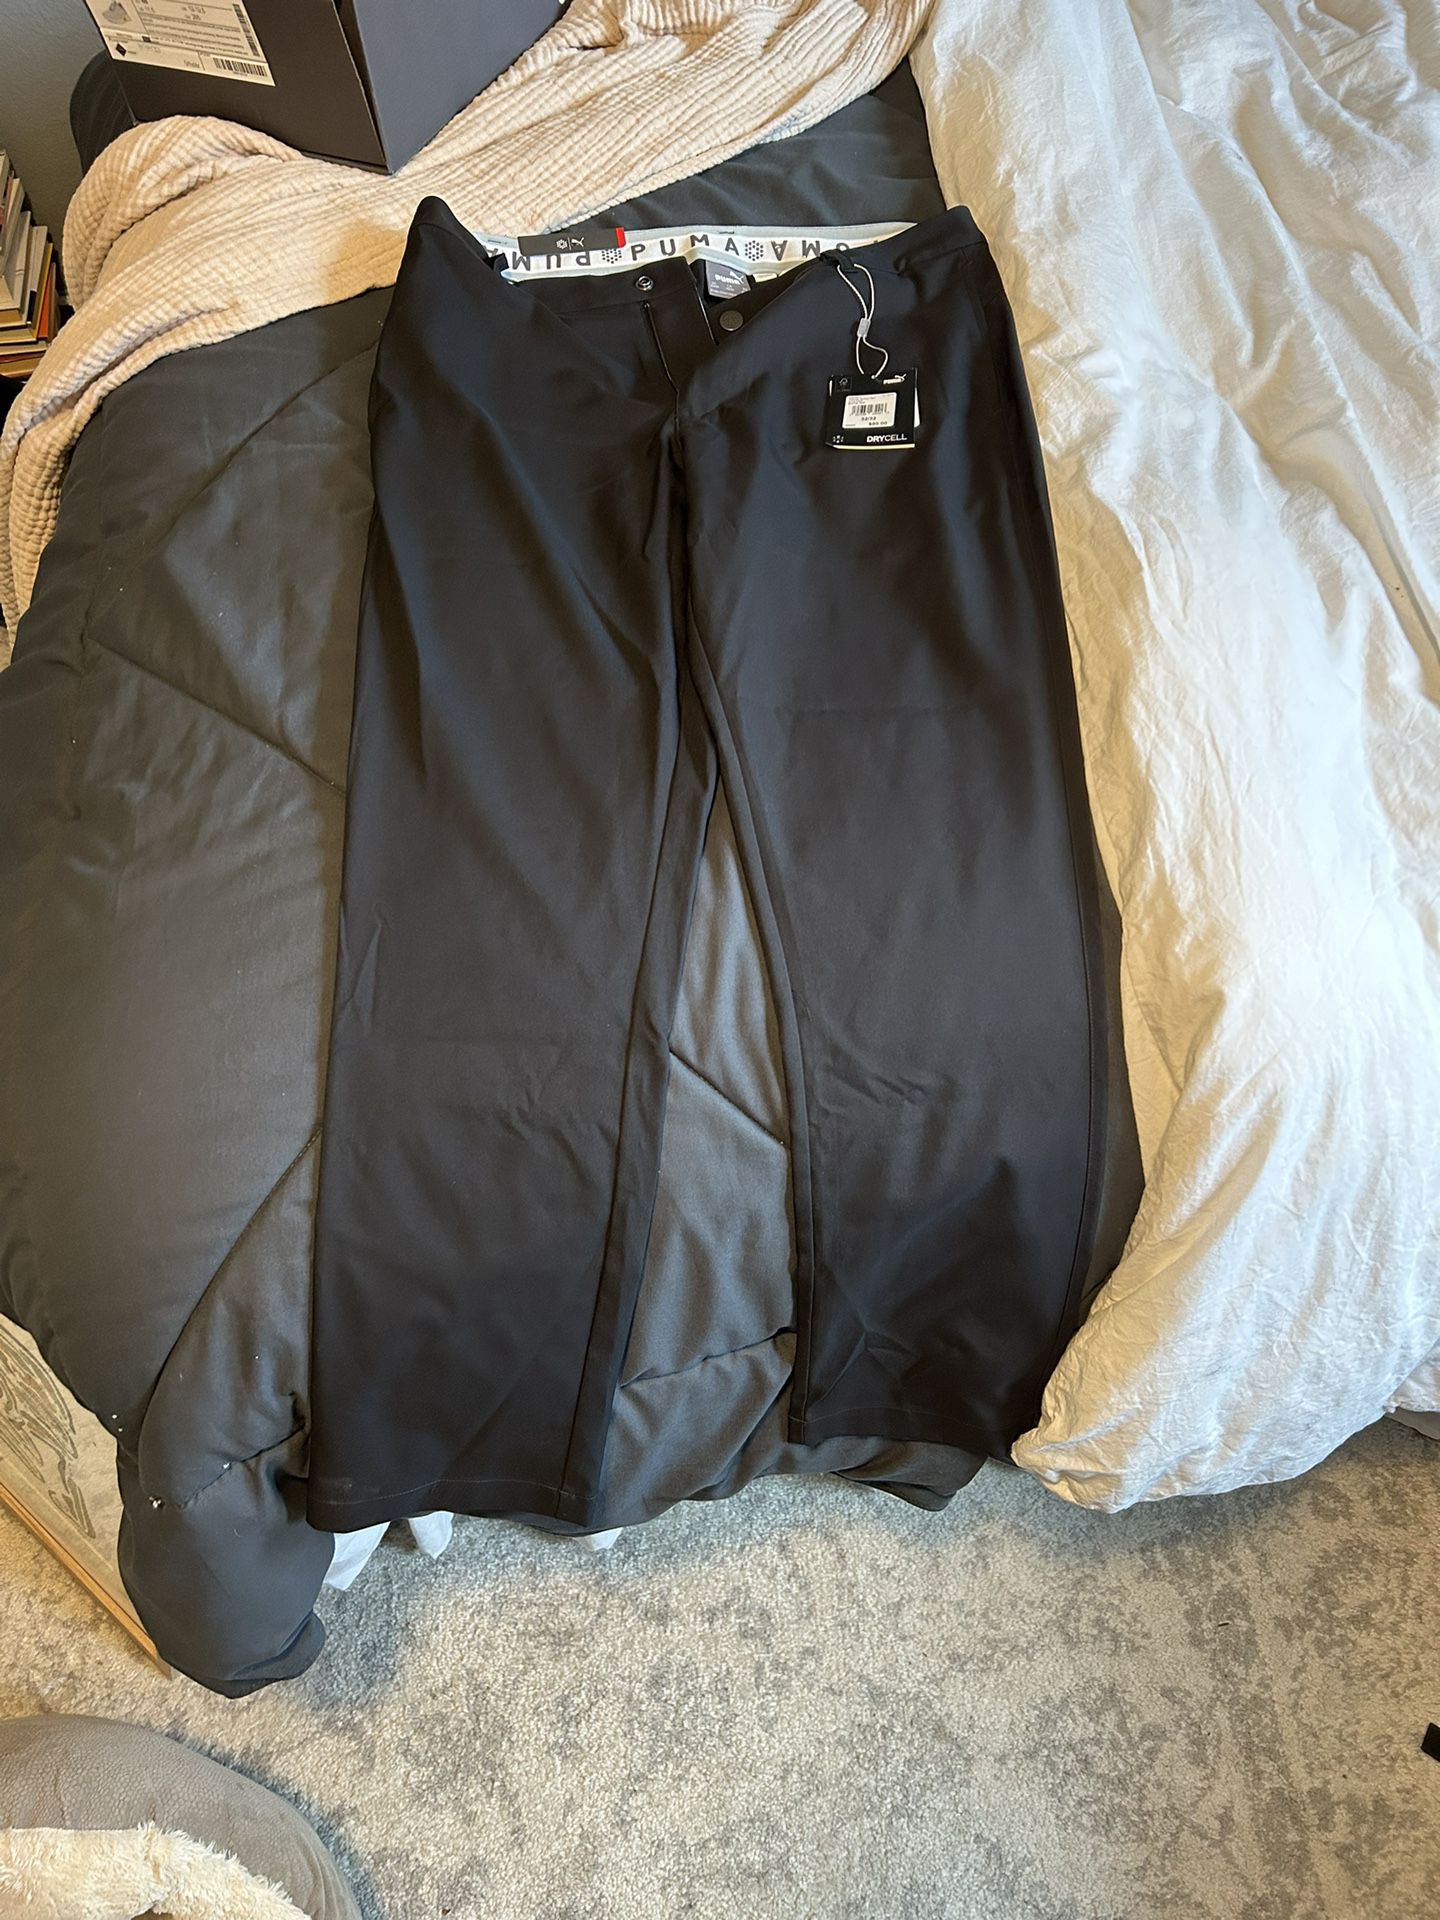 Puma Golf Pants DryCell. Men’s 32x32 Size 